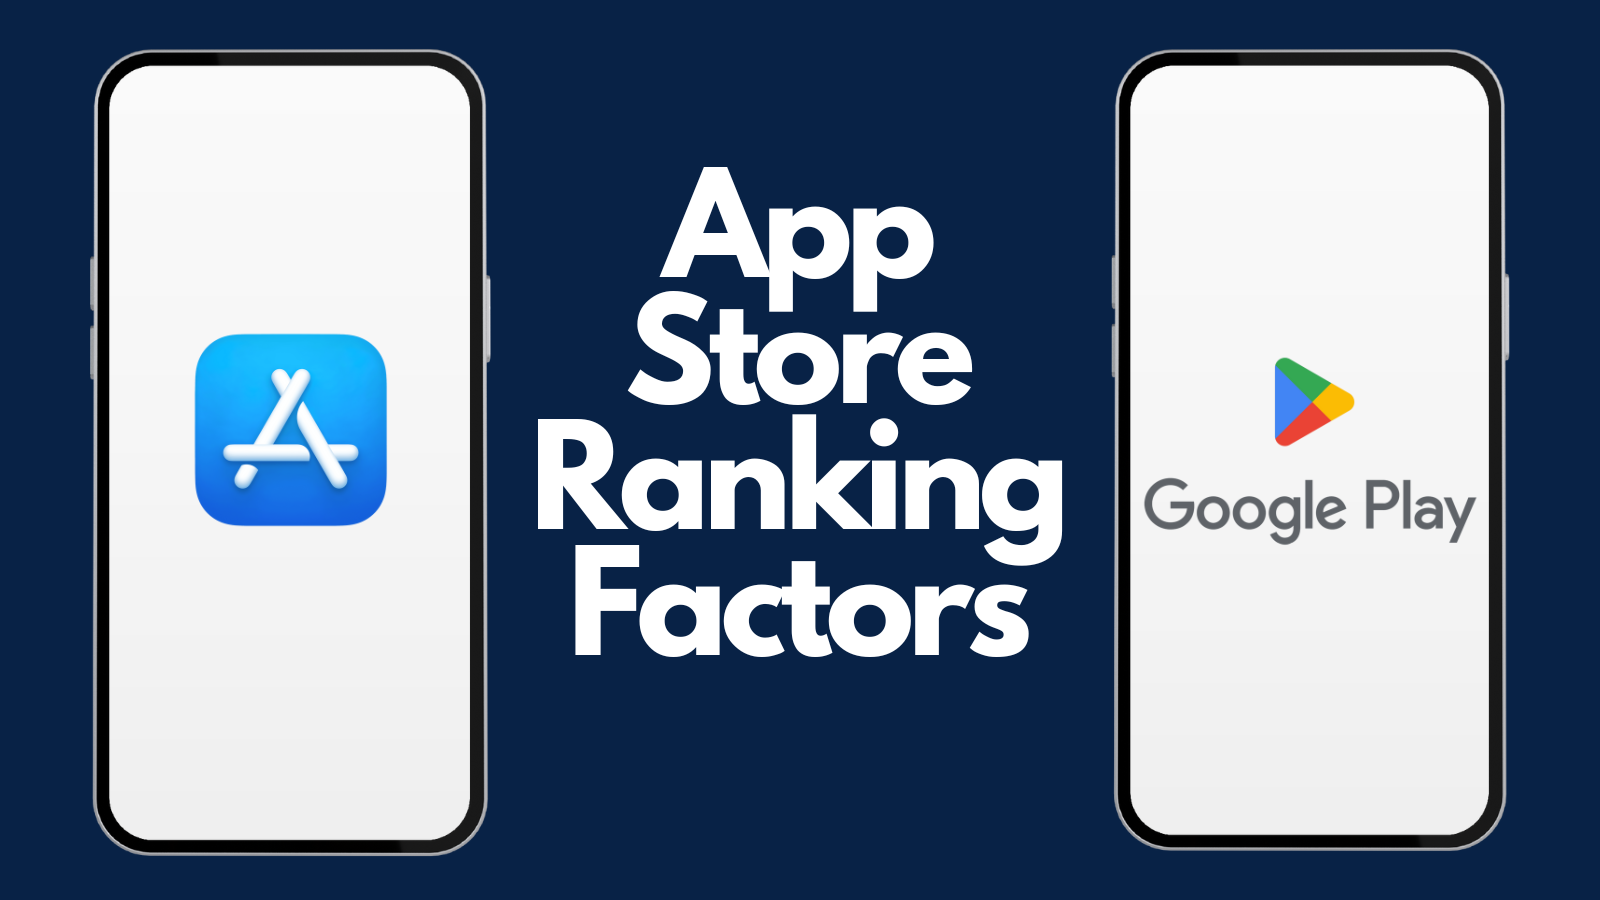 App Store Ranking Factors Banner Image